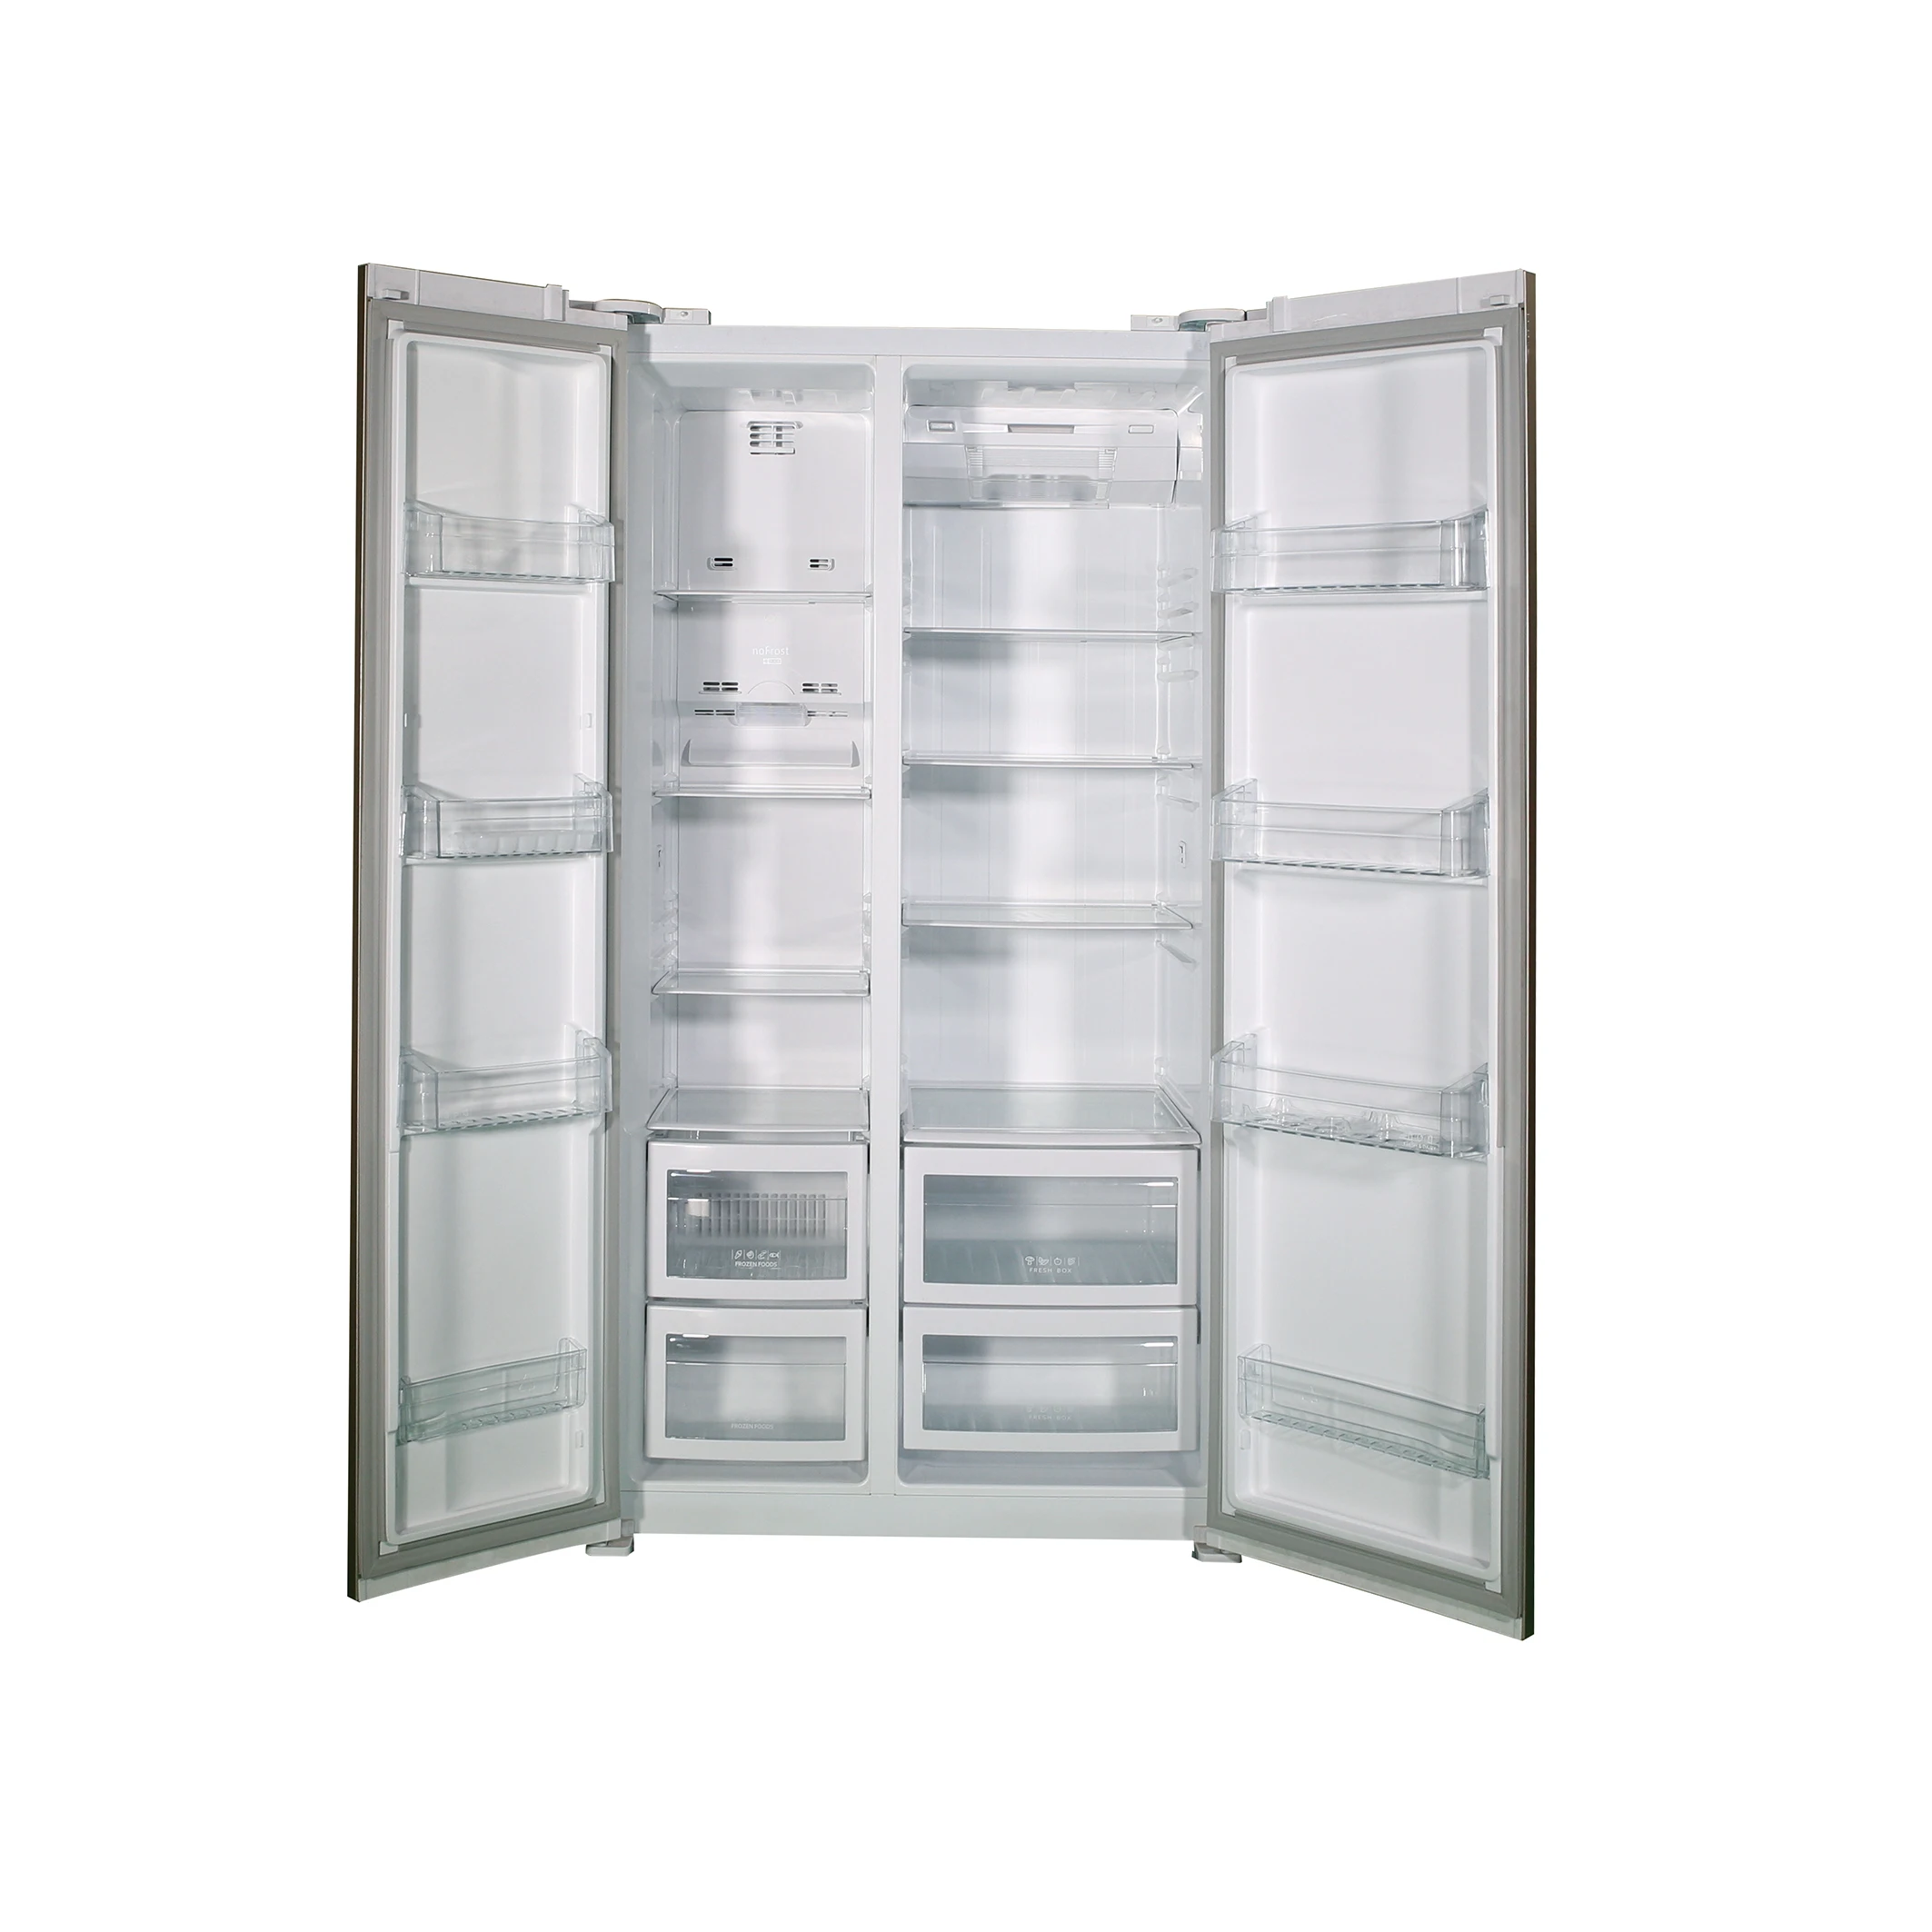 BCD-528  domestic  side by side refrigerator Vertical drawer fridge